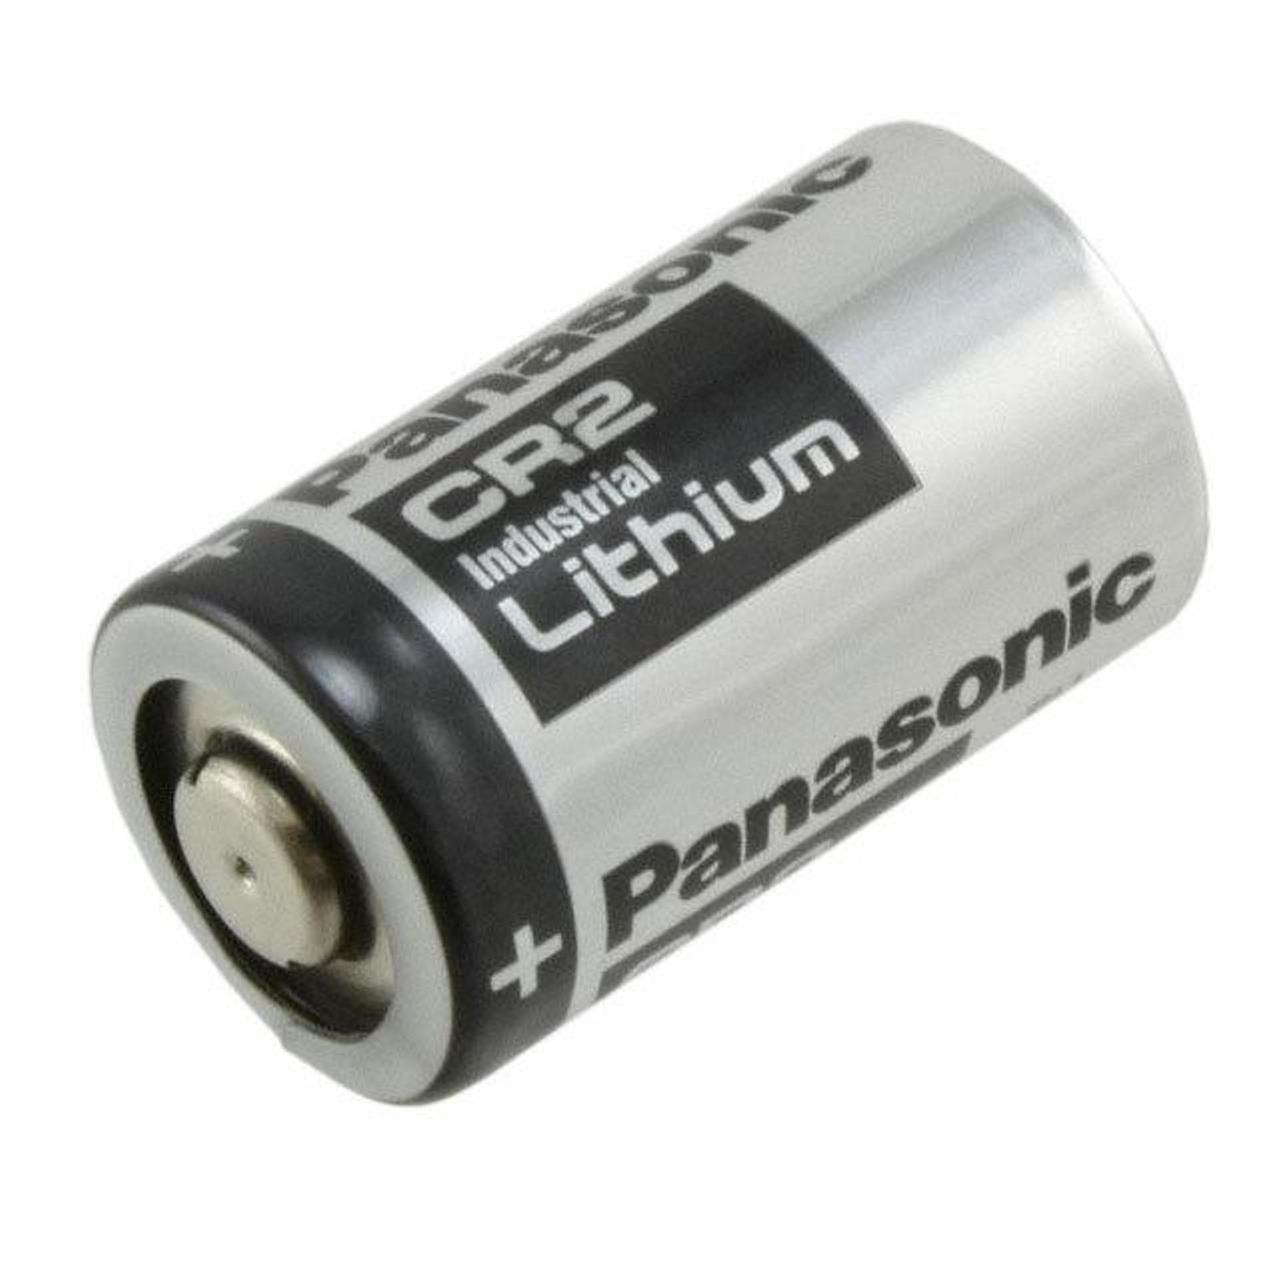 Panasonic CR2 3.0V Photo Lithium Battery - 1 Pack + FREE SHIPPING!